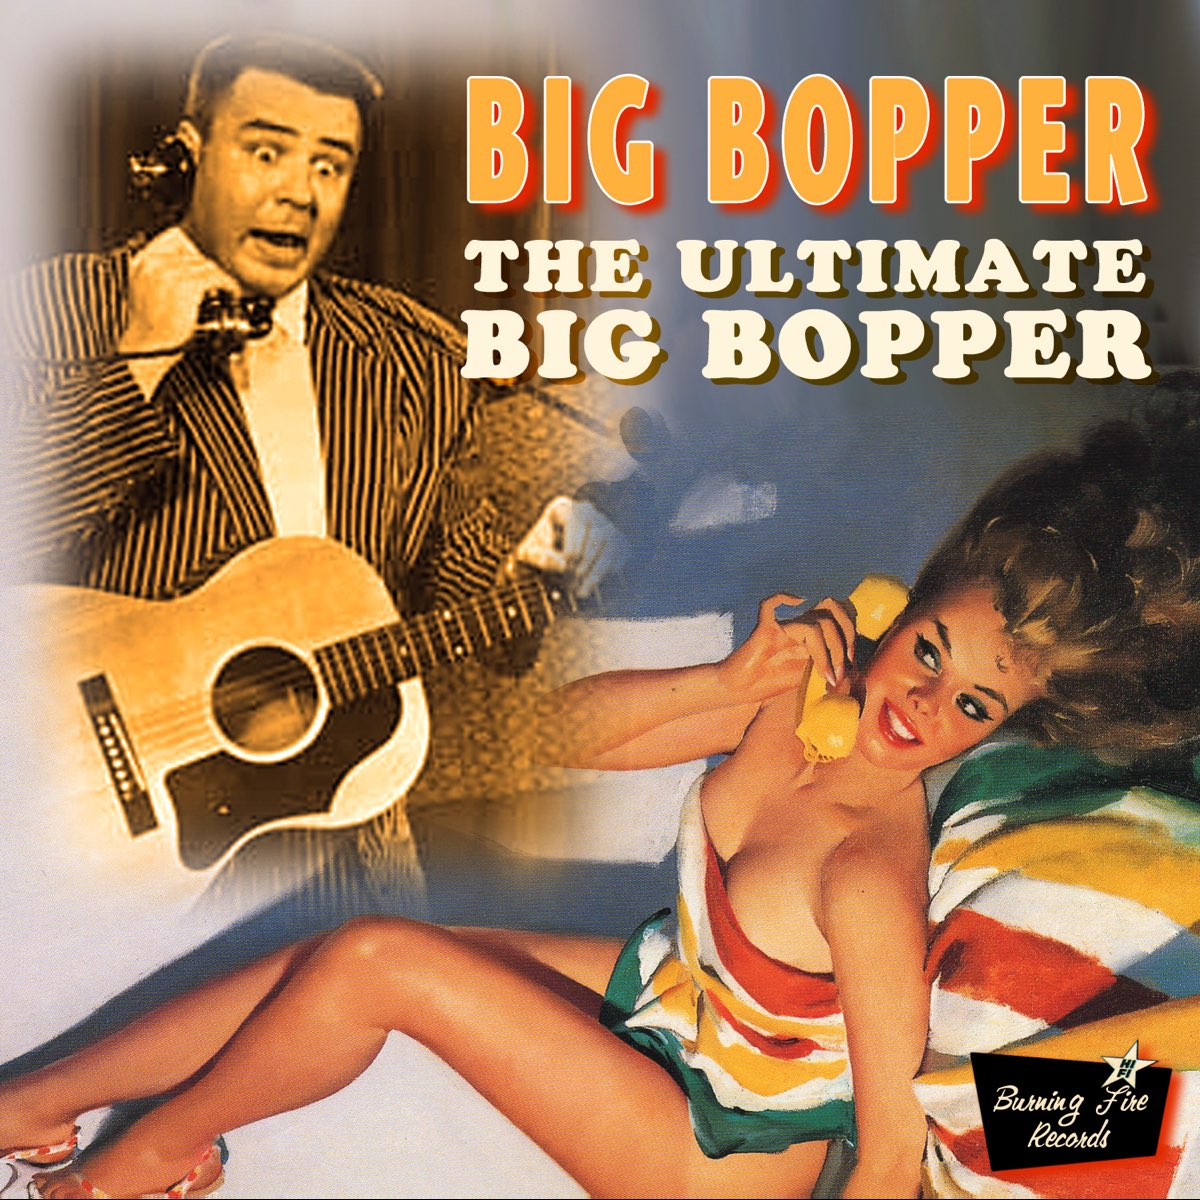 The big Bopper